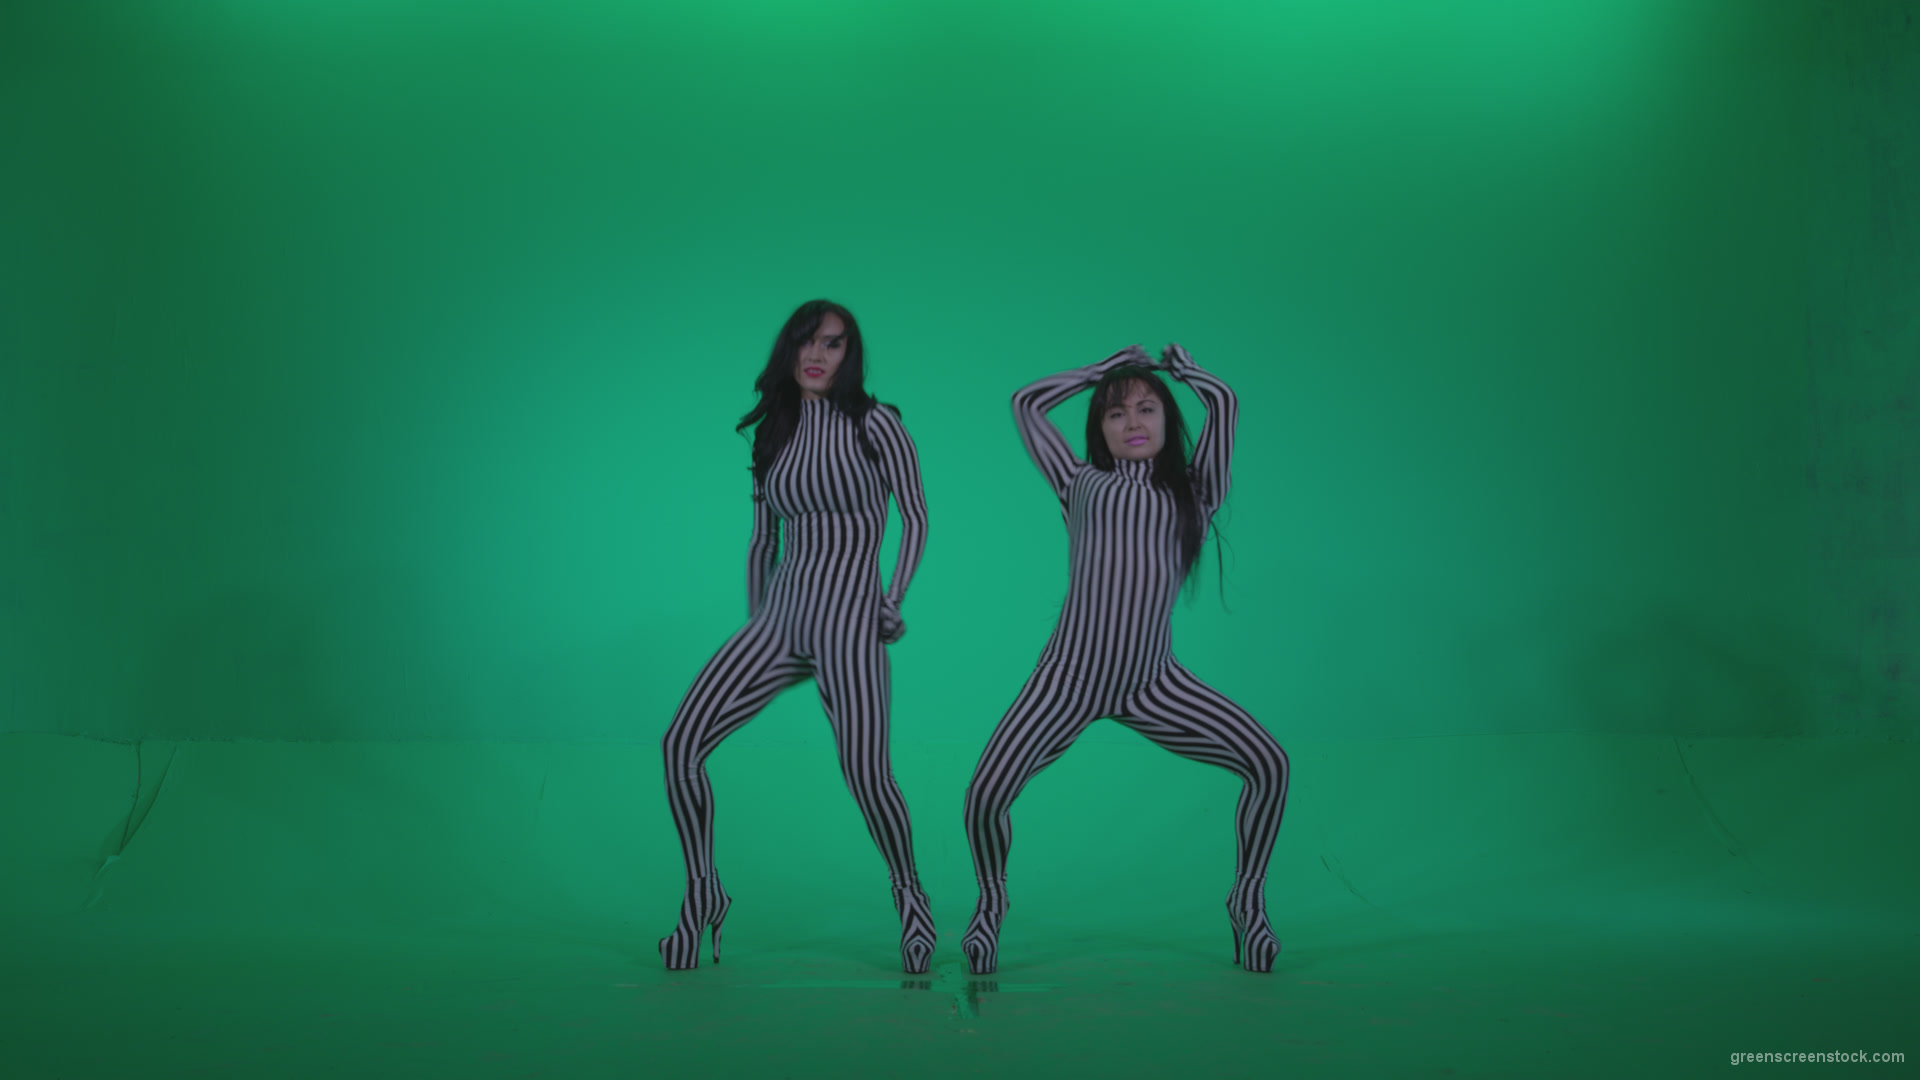 Go-go-Dancer-White-Stripes-s5-Green-Screen-Video-Footage_008 Green Screen Stock